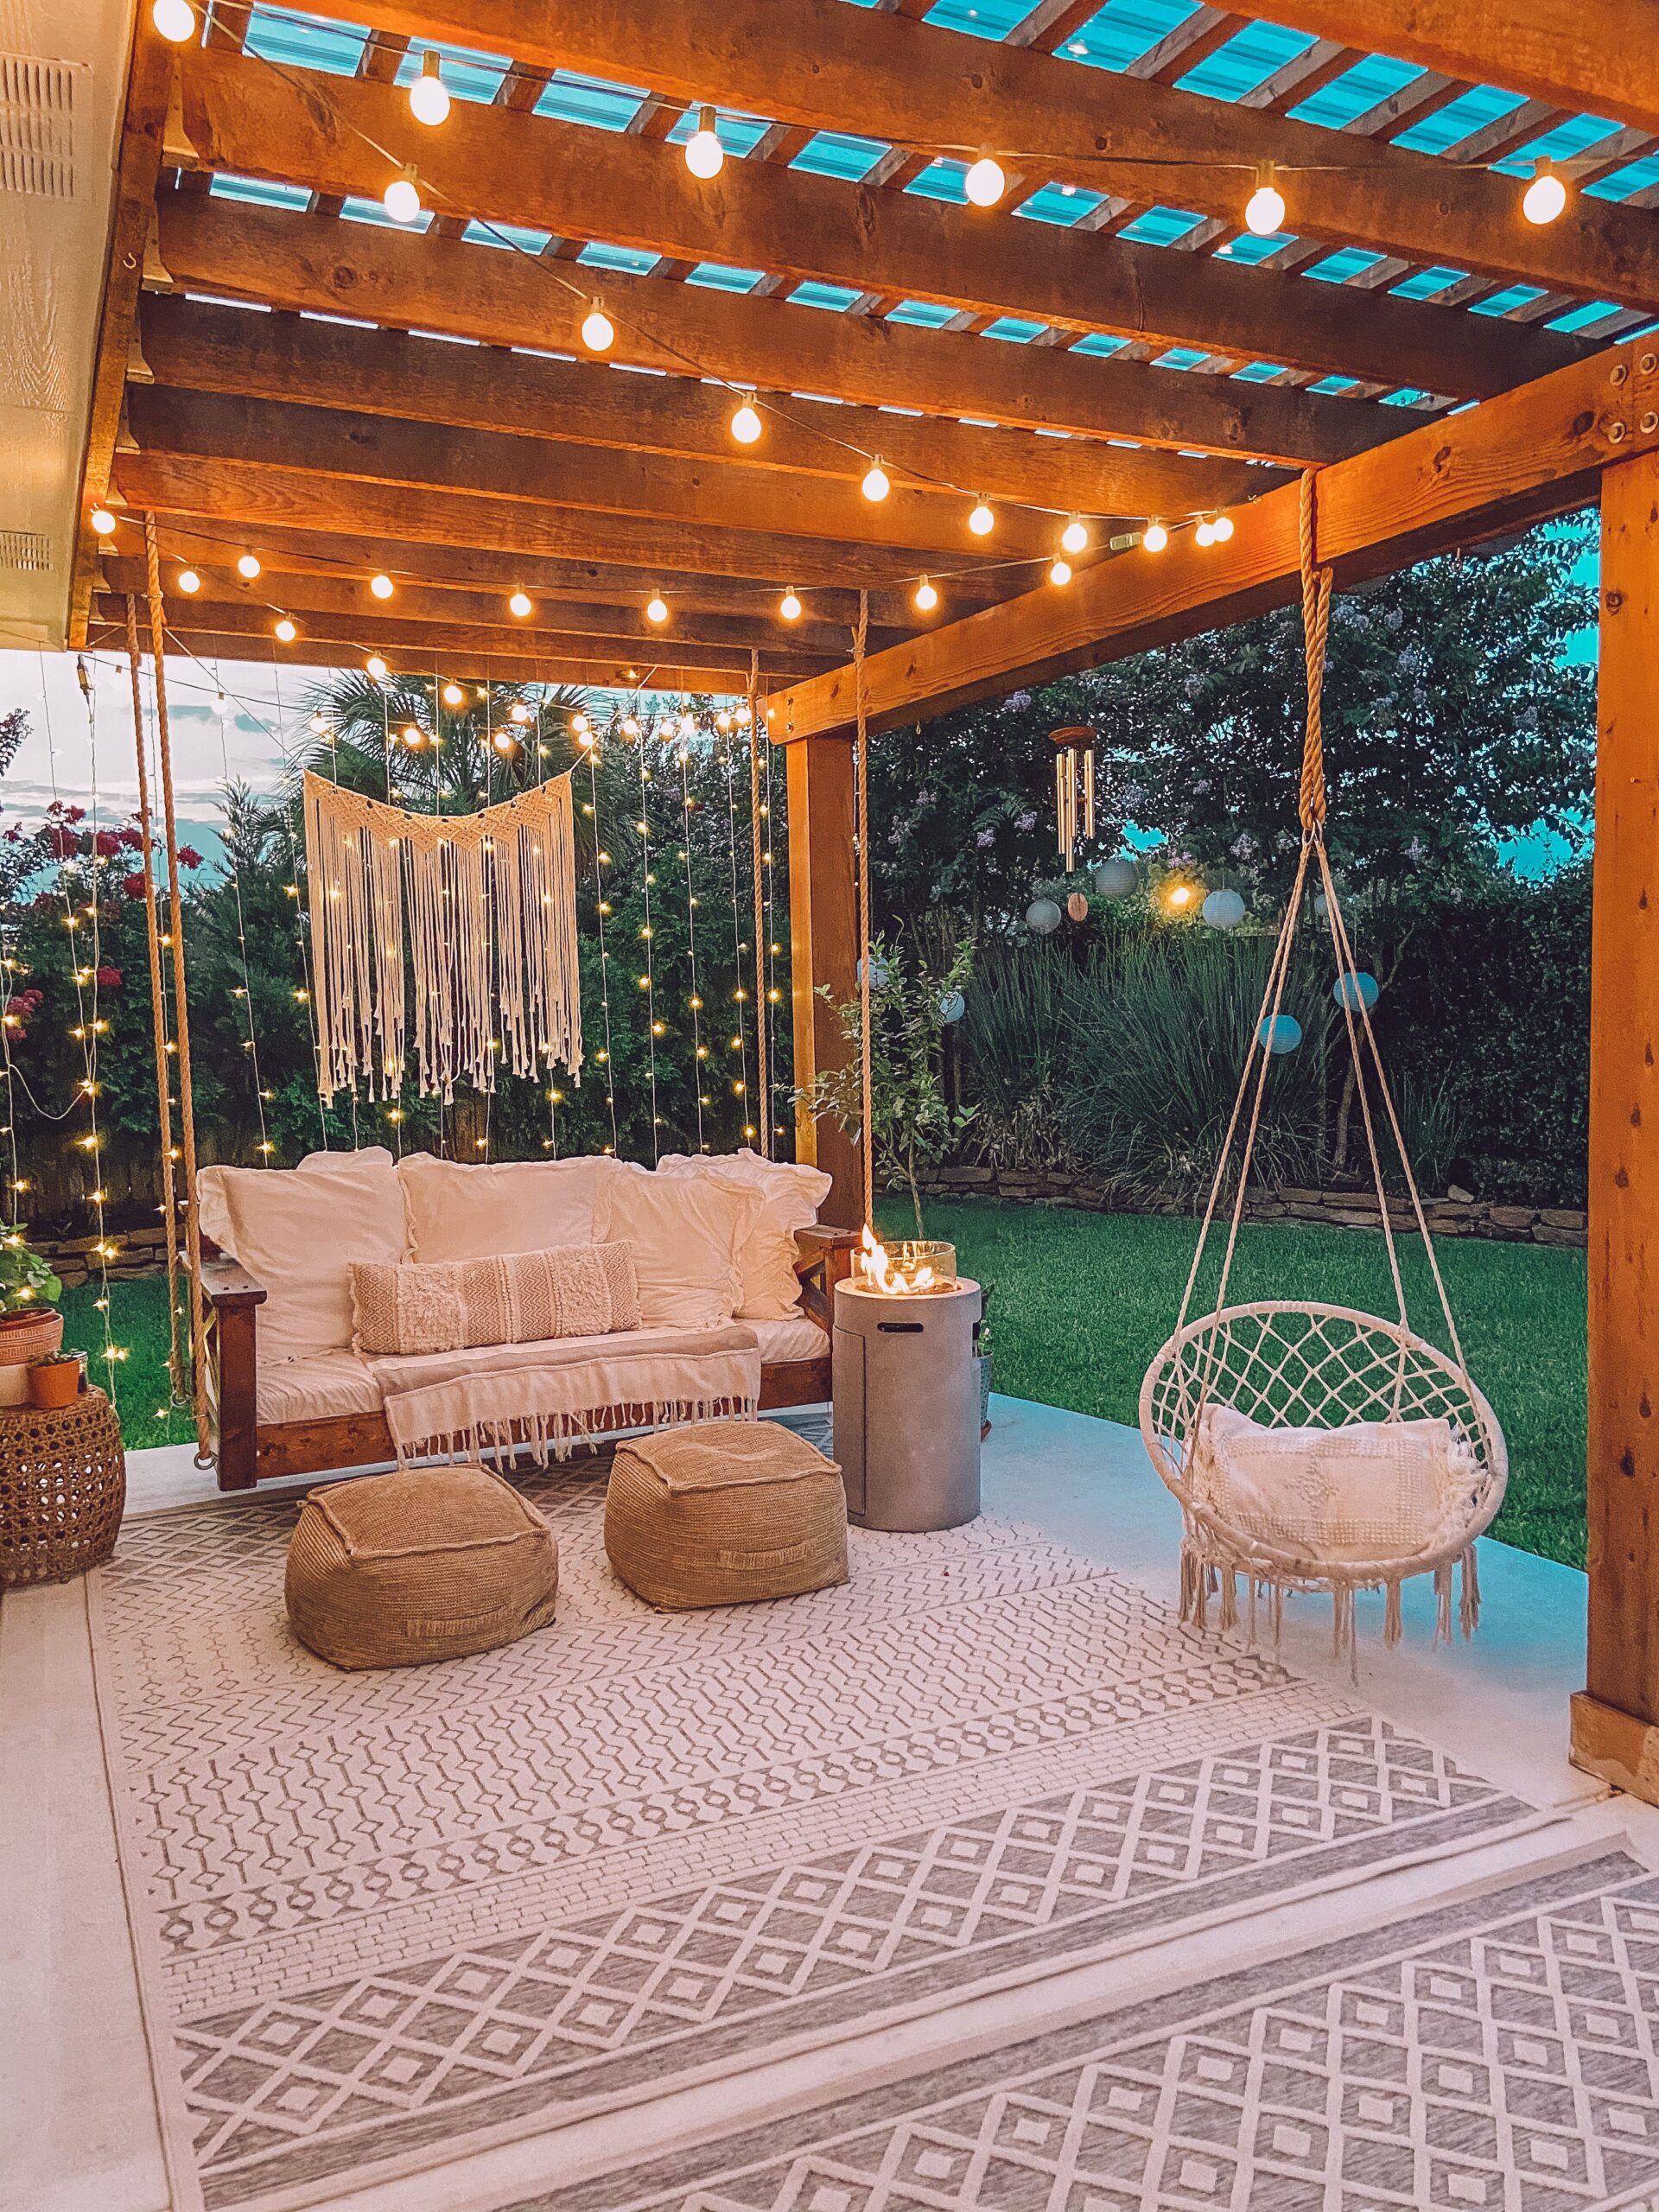 Patio Furniture Ideas to Make Your
  Backyard a Destination